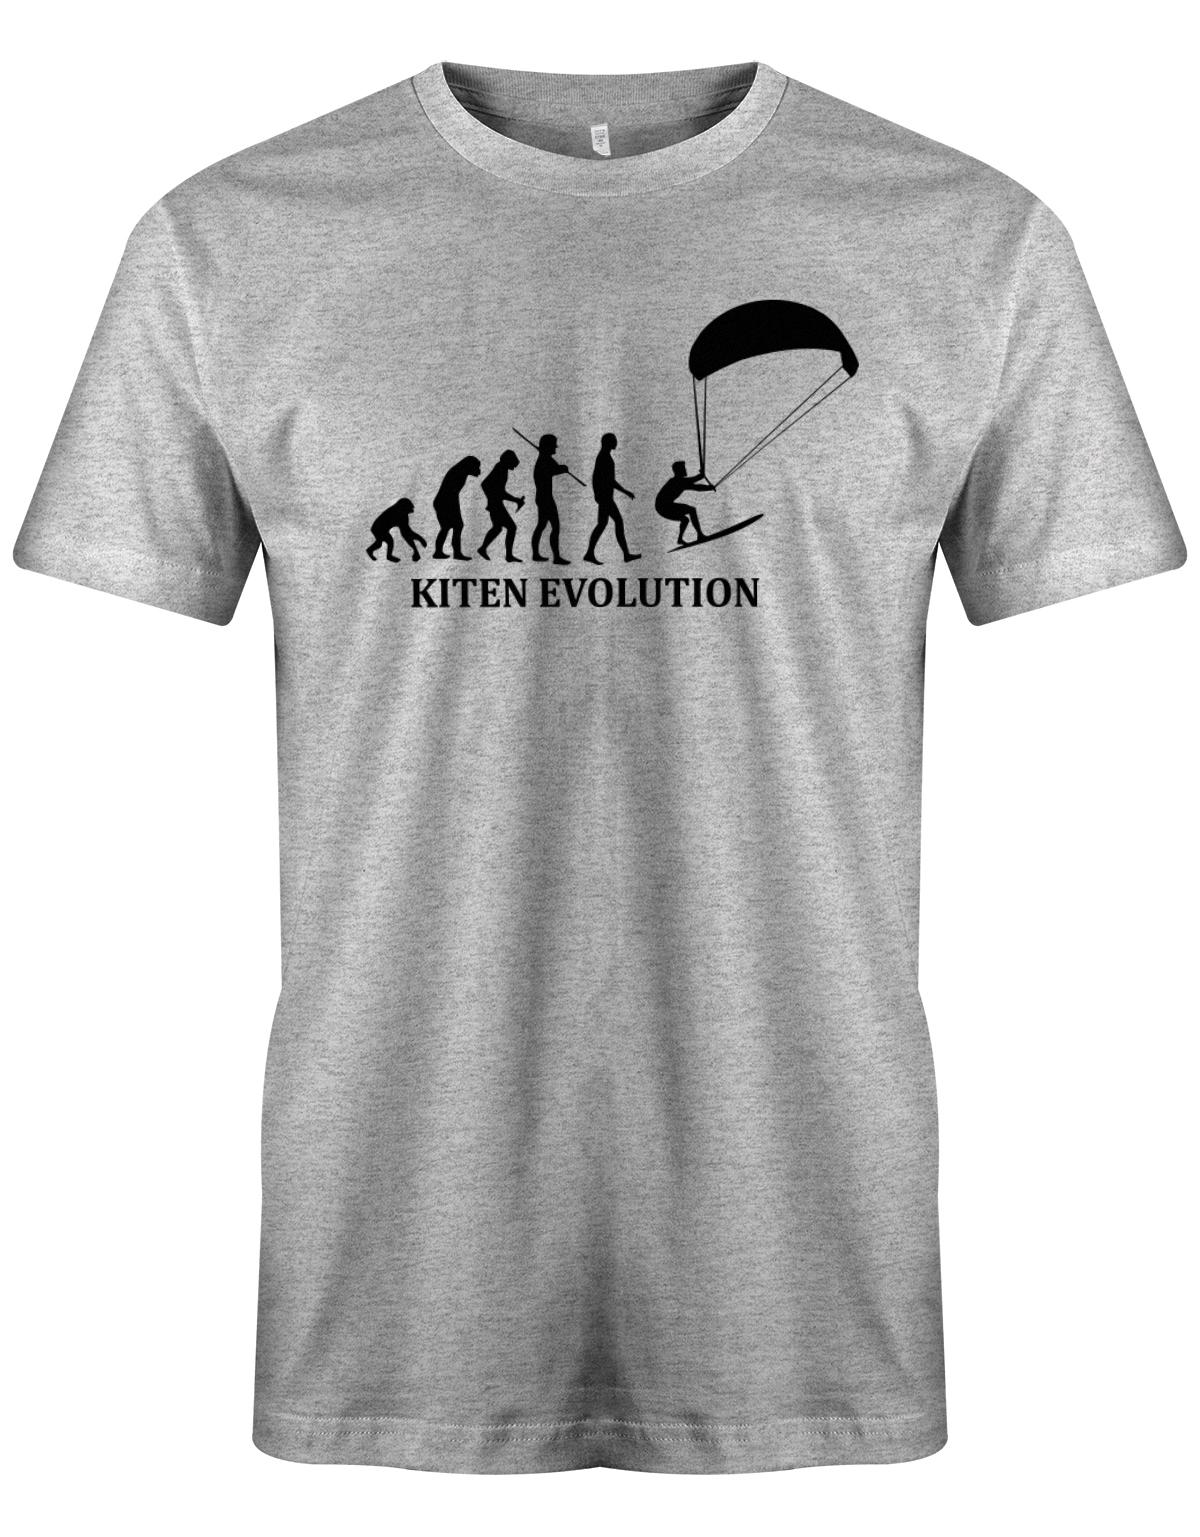 Kiten-Evolution-Herren-Shirt-GRau